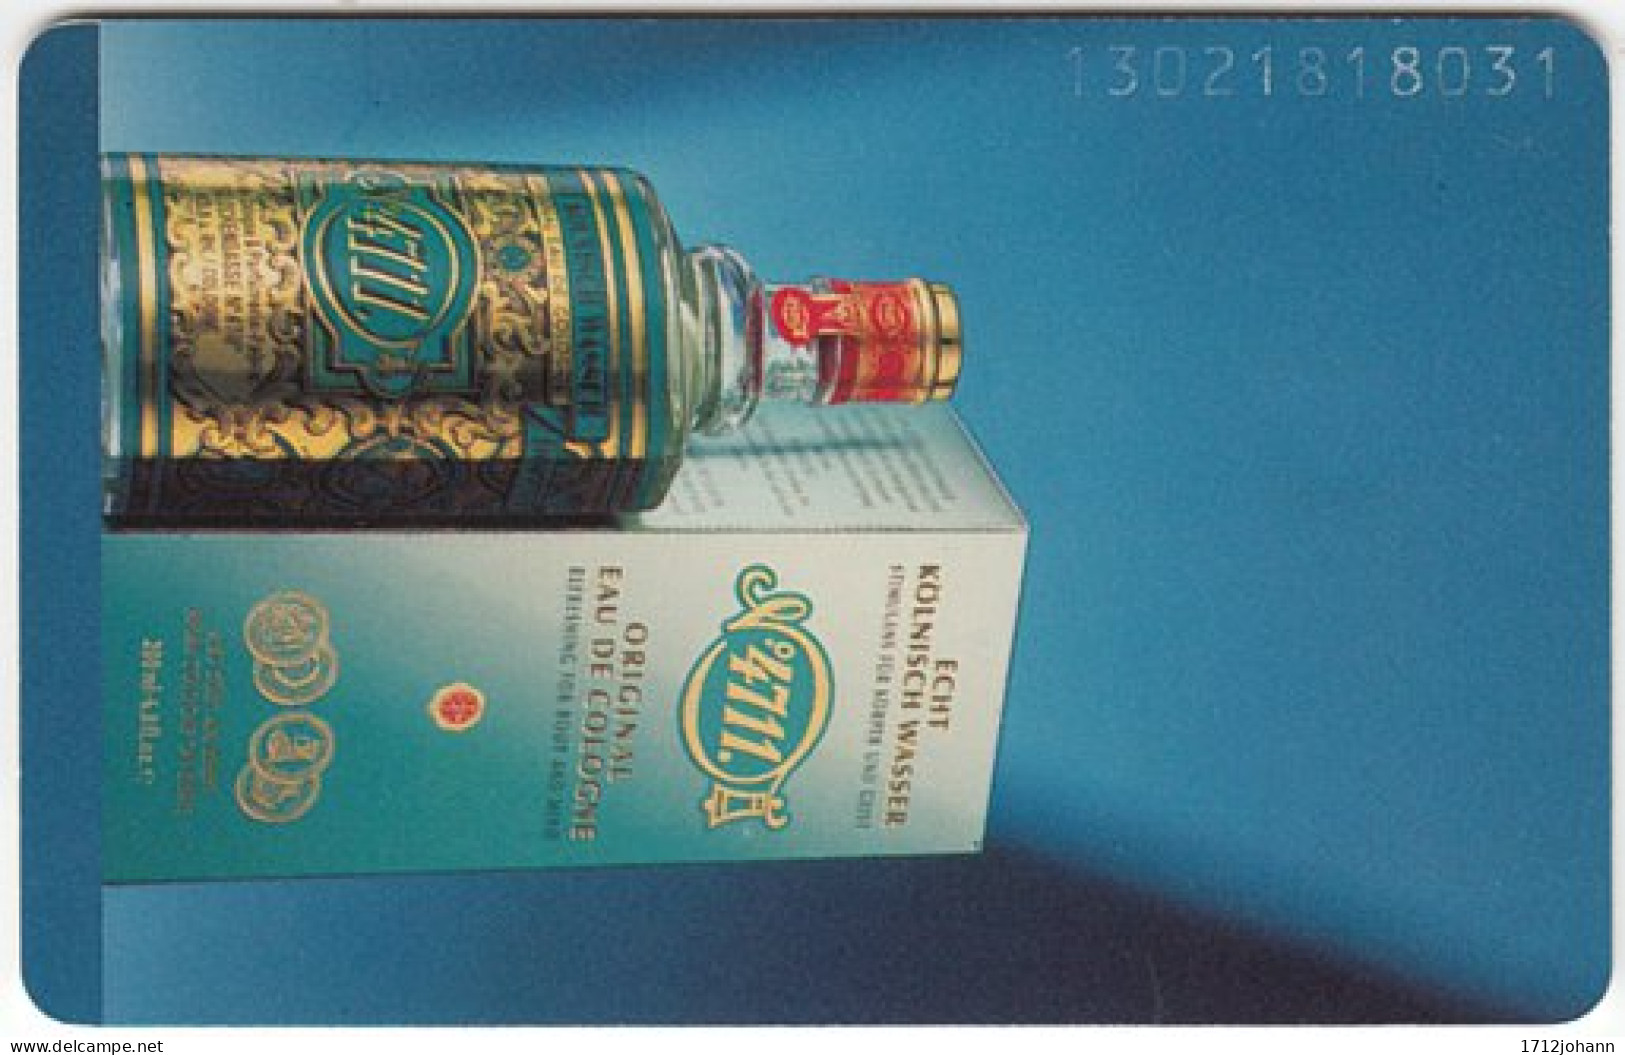 GERMANY S-Serie B-102 - Advertising, Body Care, Parfum (1302) - Used - S-Series: Schalterserie Mit Fremdfirmenreklame